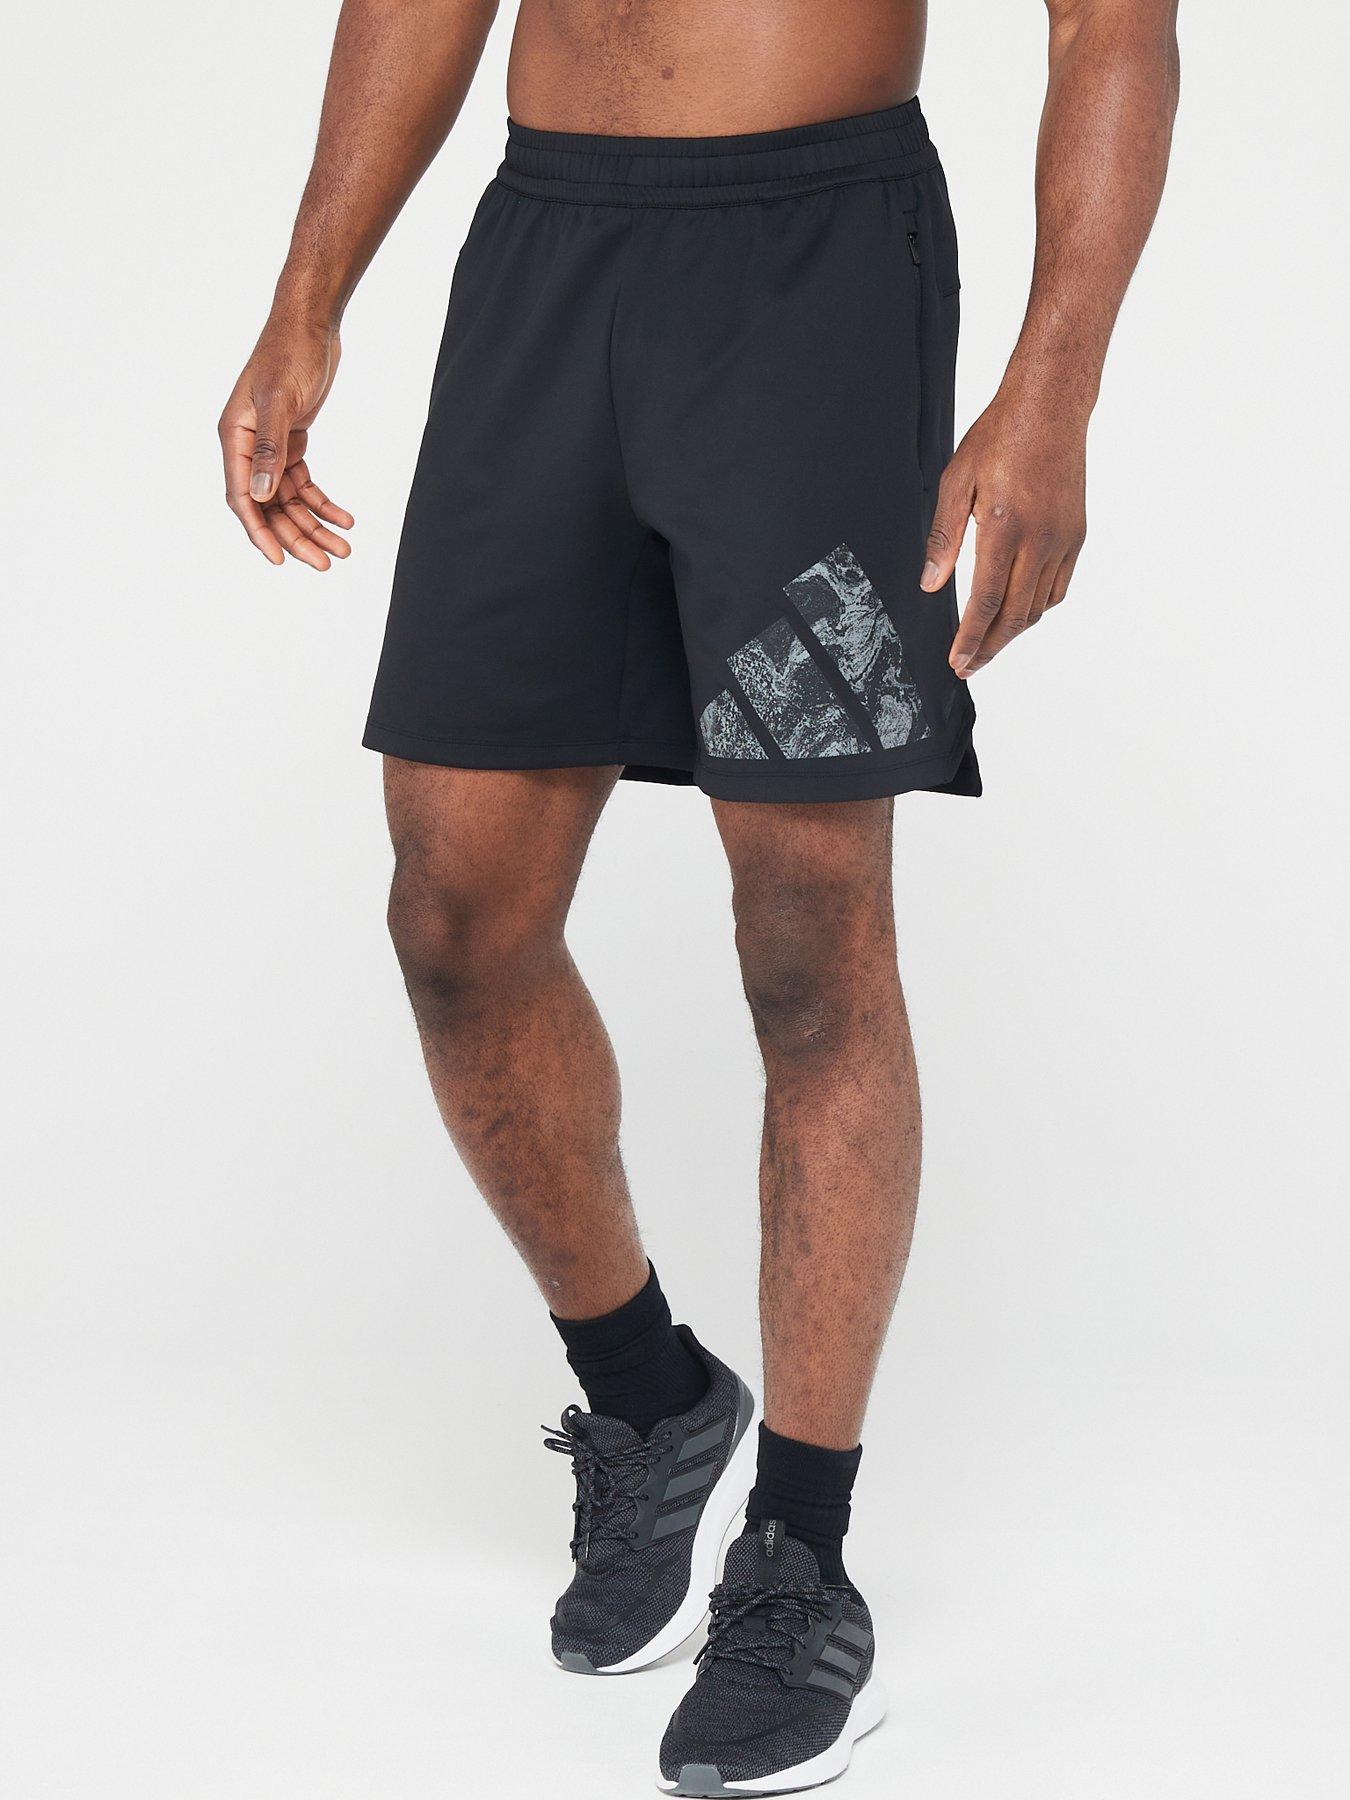 adidas Mens 3 Stripe Shorts with Zipper Pockets (Grey Six/Black